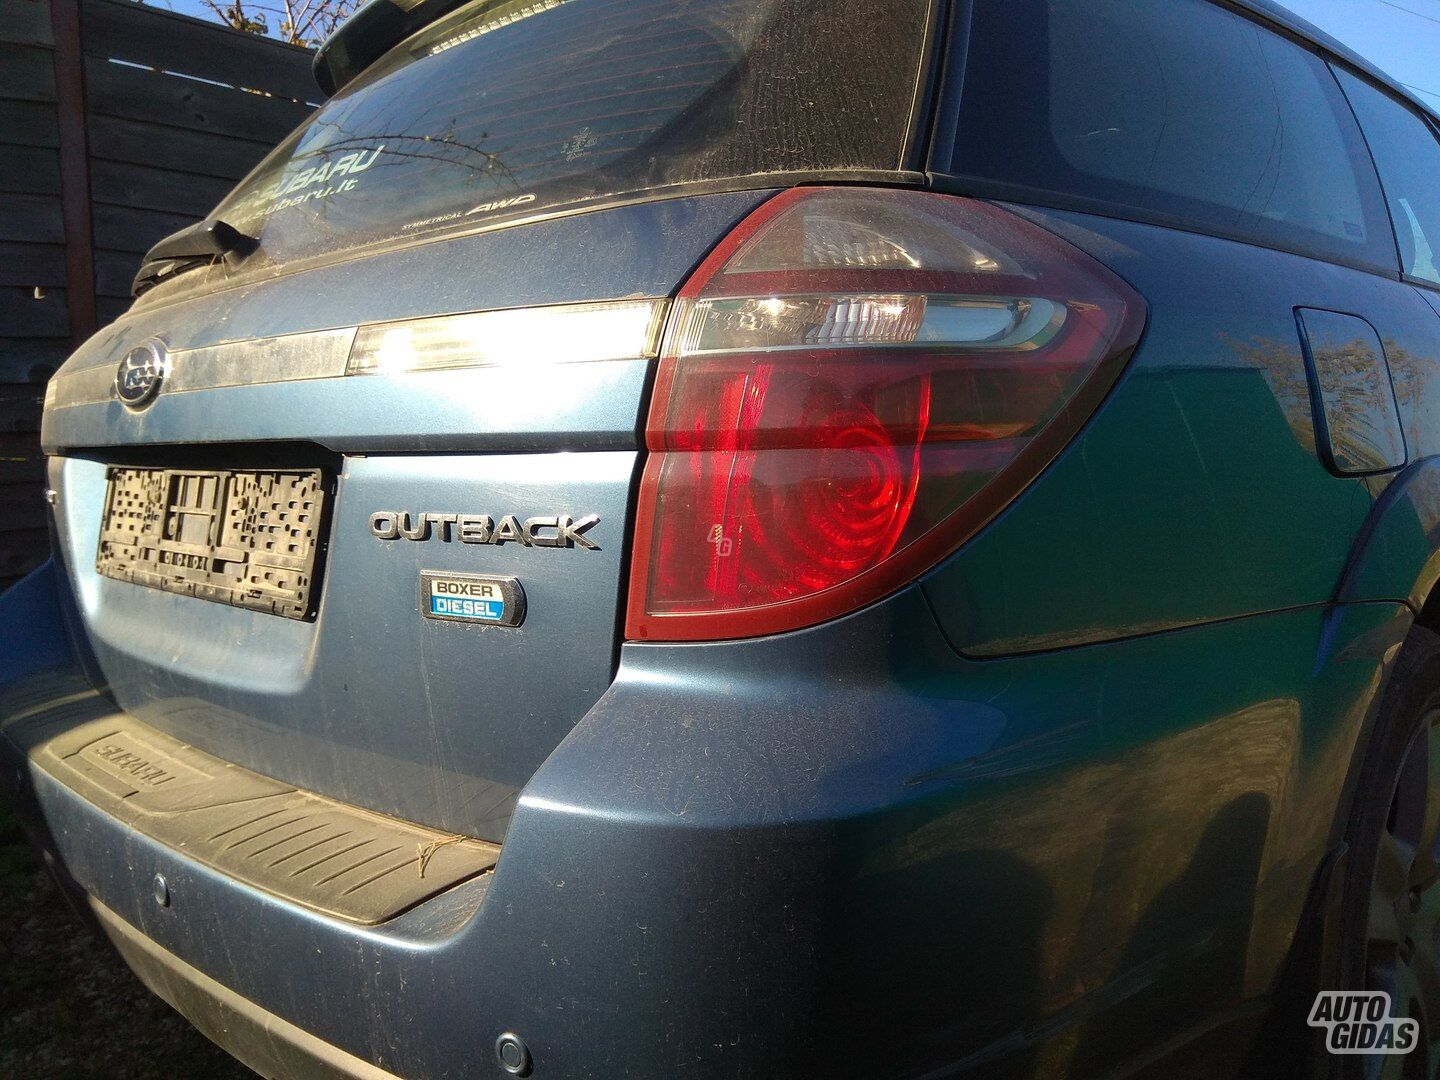 Subaru Outback III 2008 г запчясти